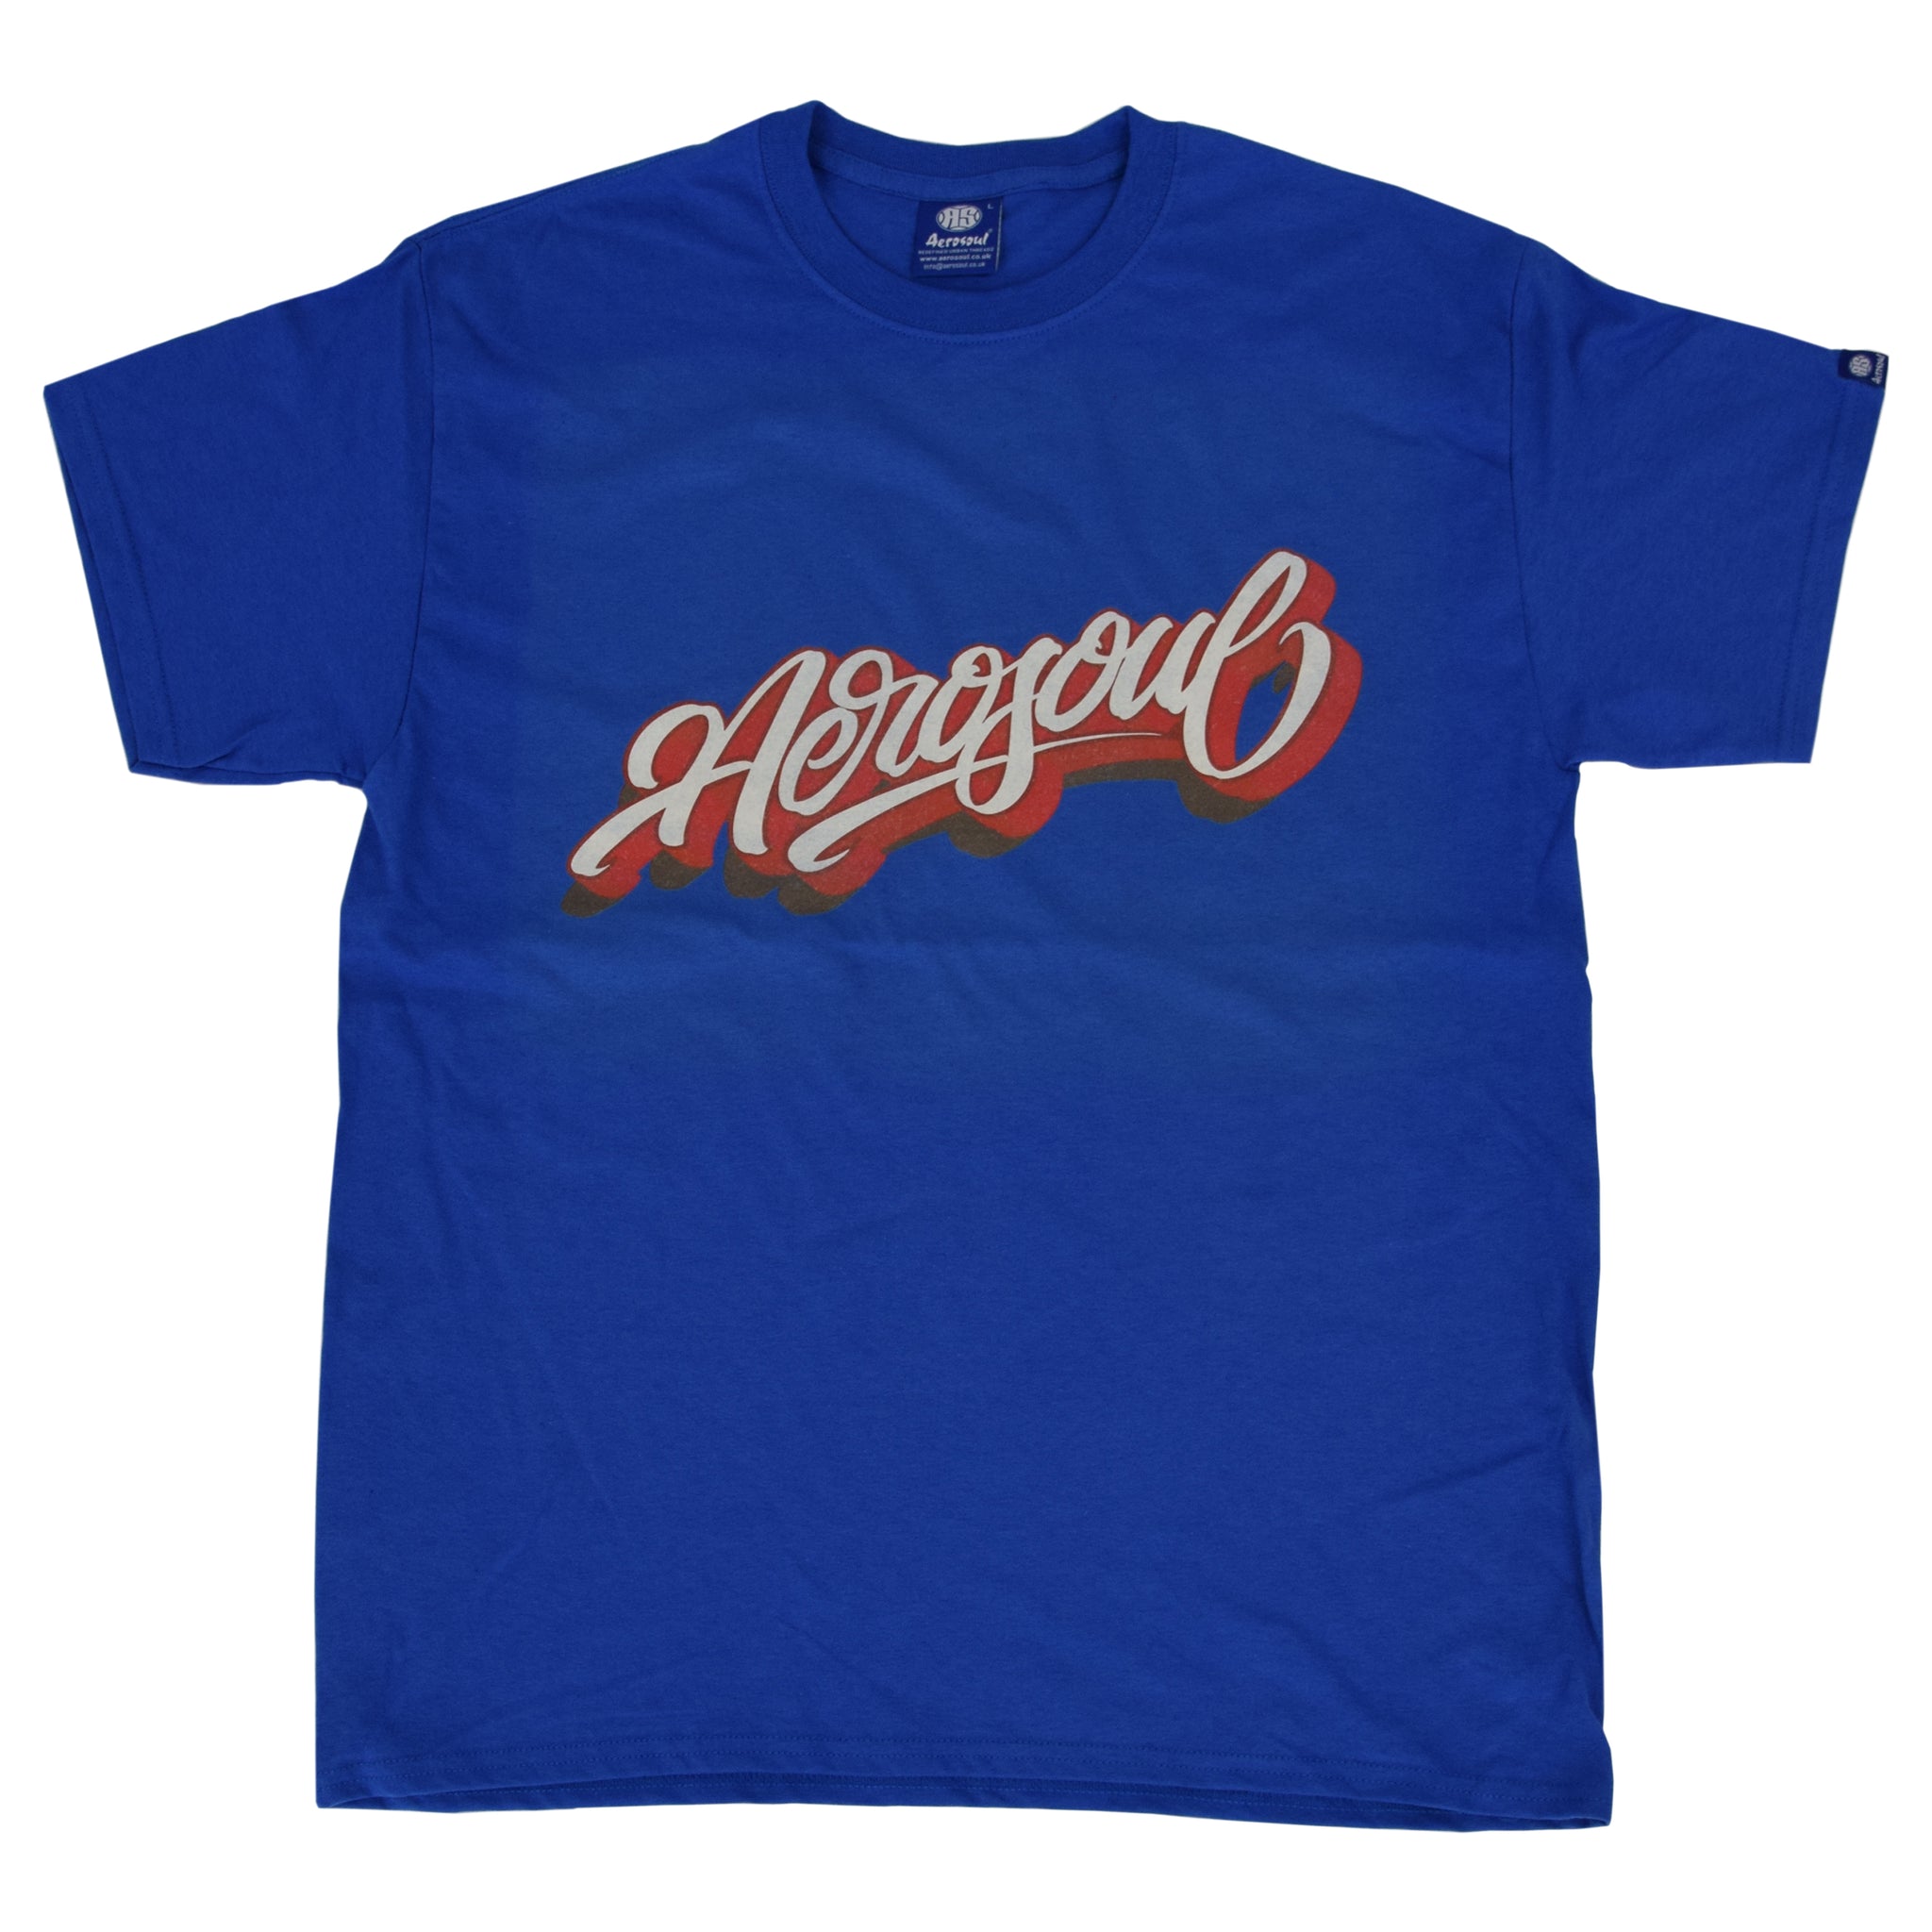 Aero-Script T-Shirt (Royal Blue)